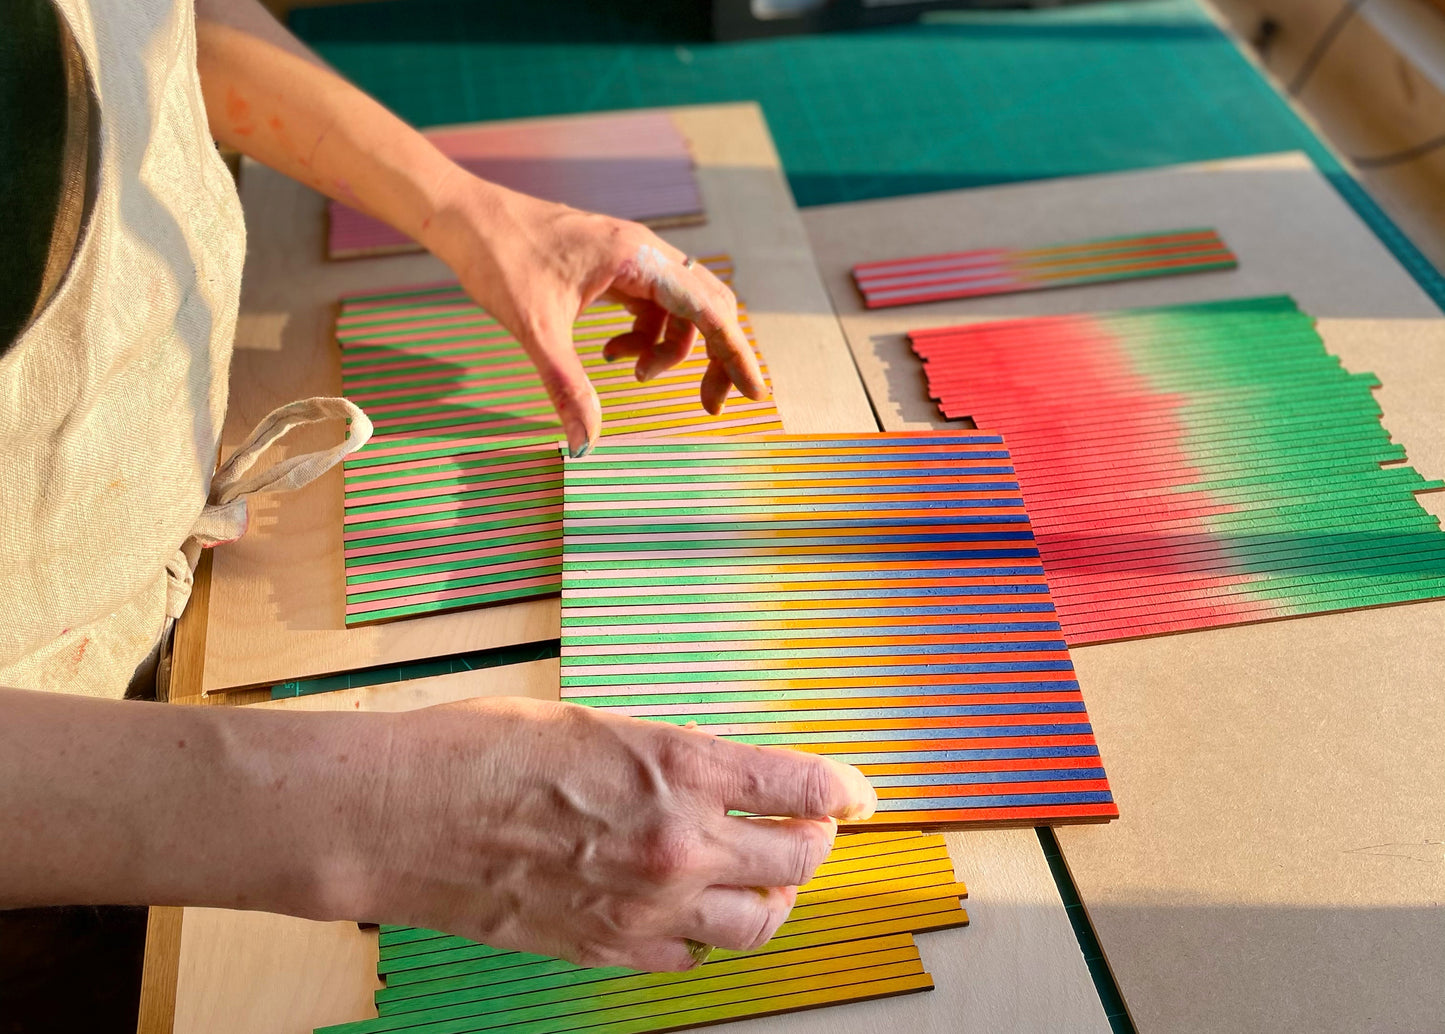 Seattle Stripe Colour Study Painting